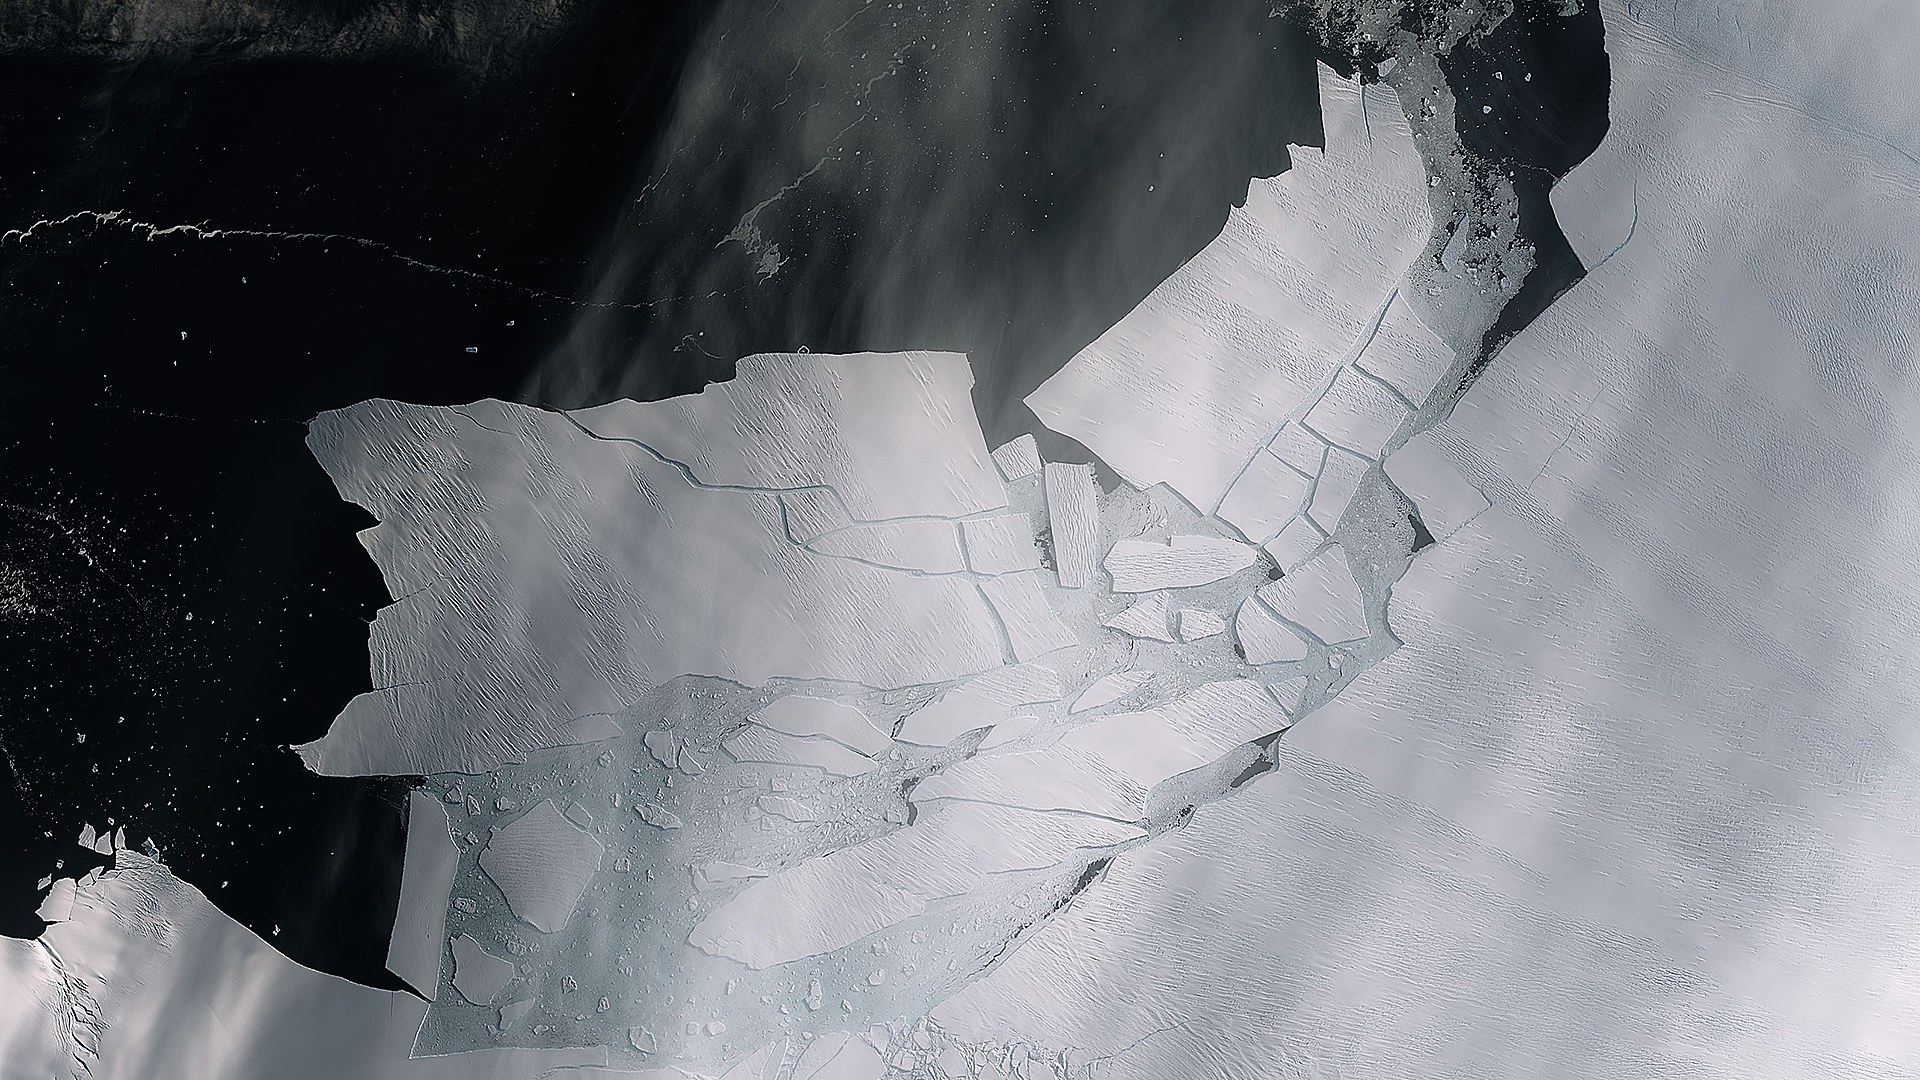 Break-up of the Pine Island Glacier